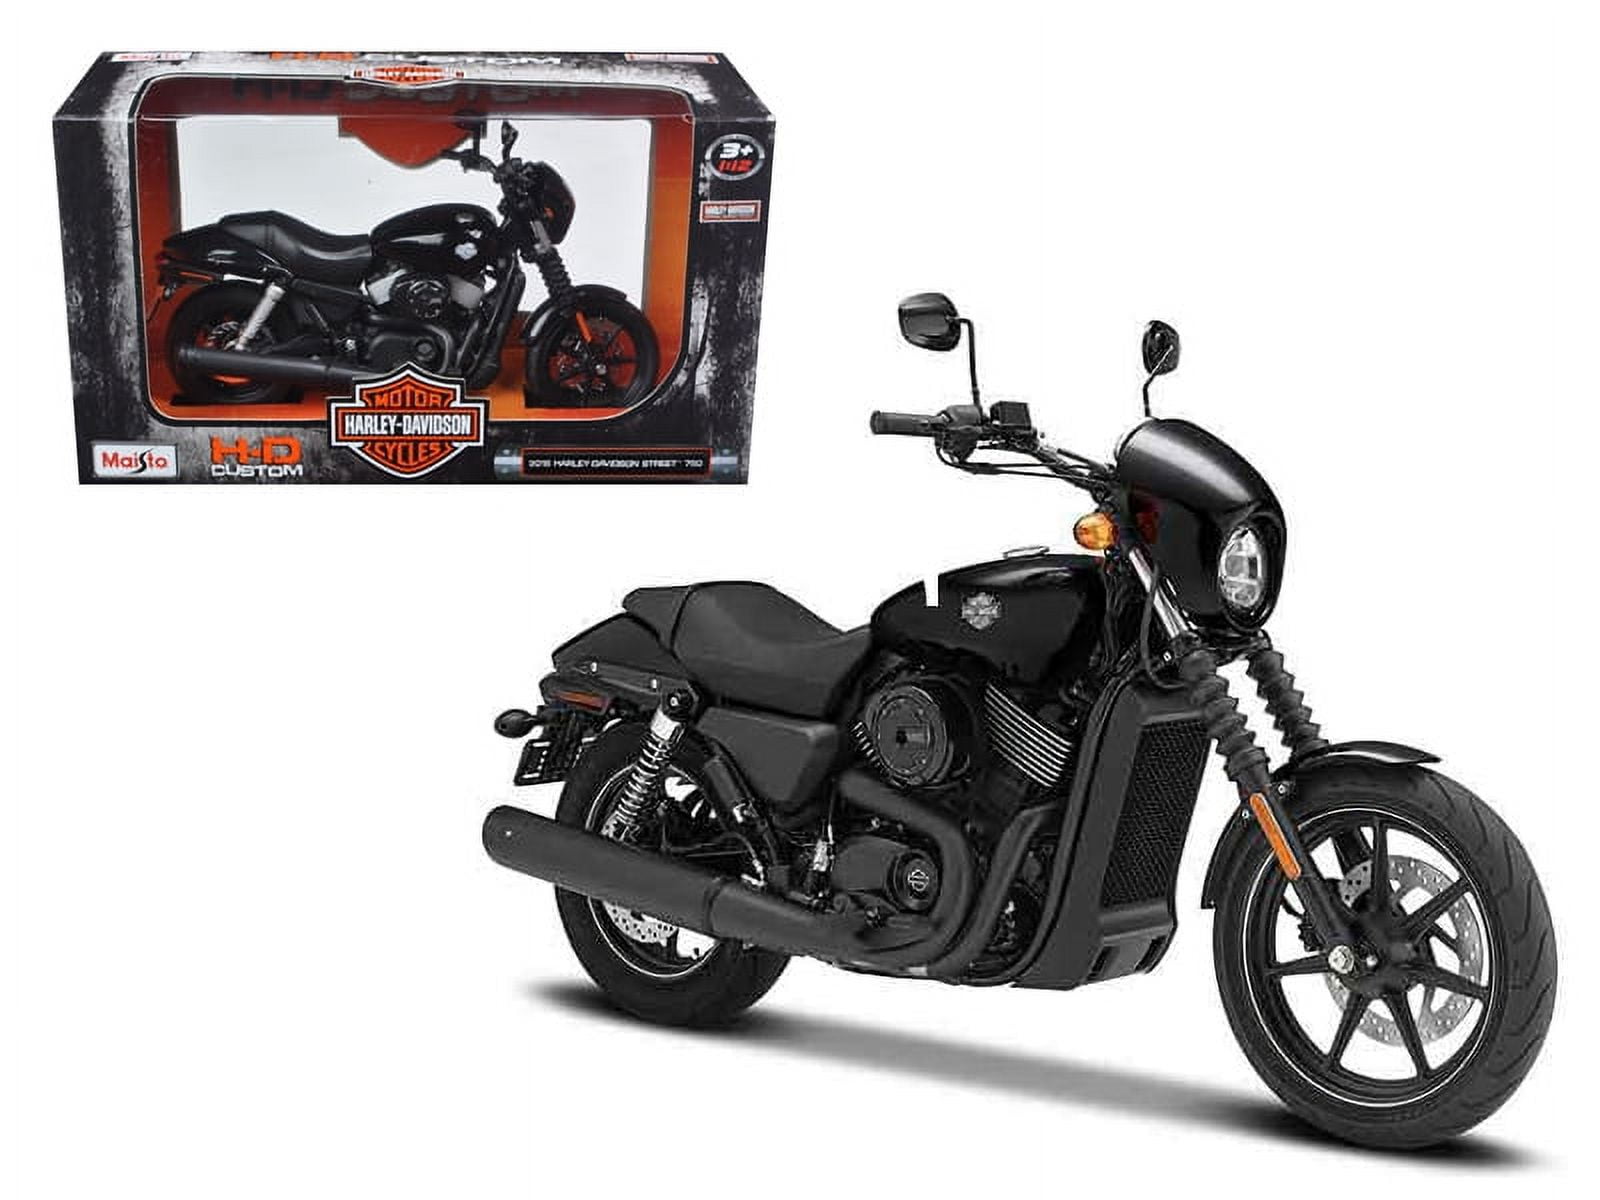 Maisto 32333 1 By 12 Scale 2015 Harley Davidson Street 750 Motorcycle Model